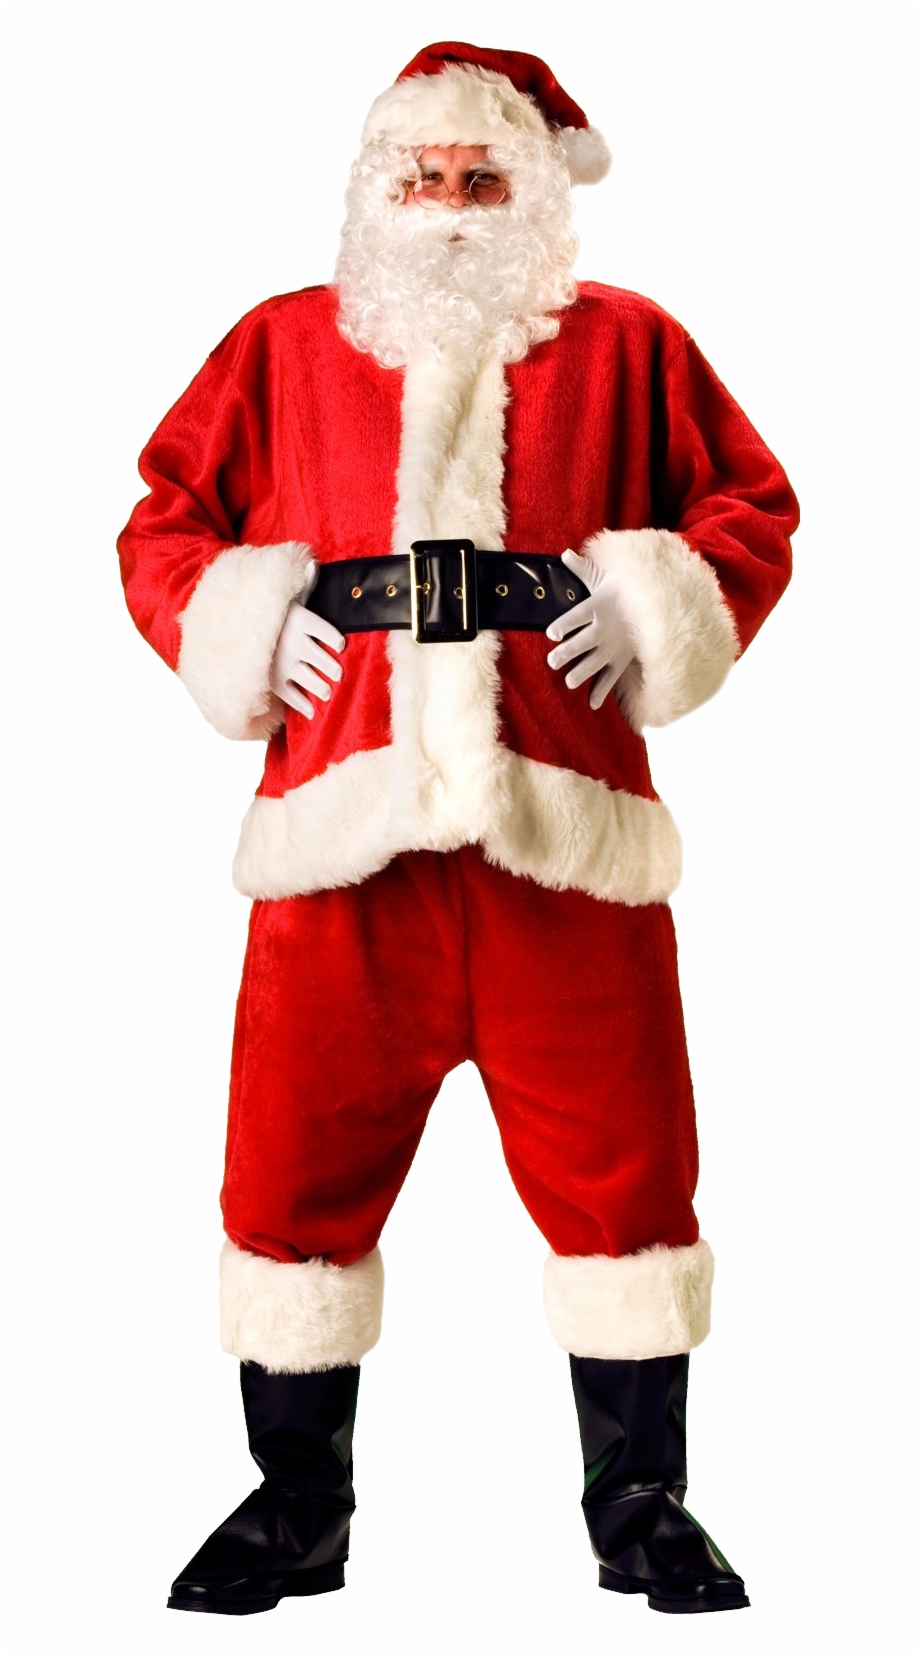 Santa Claus Png Images Free Download Santa Claus